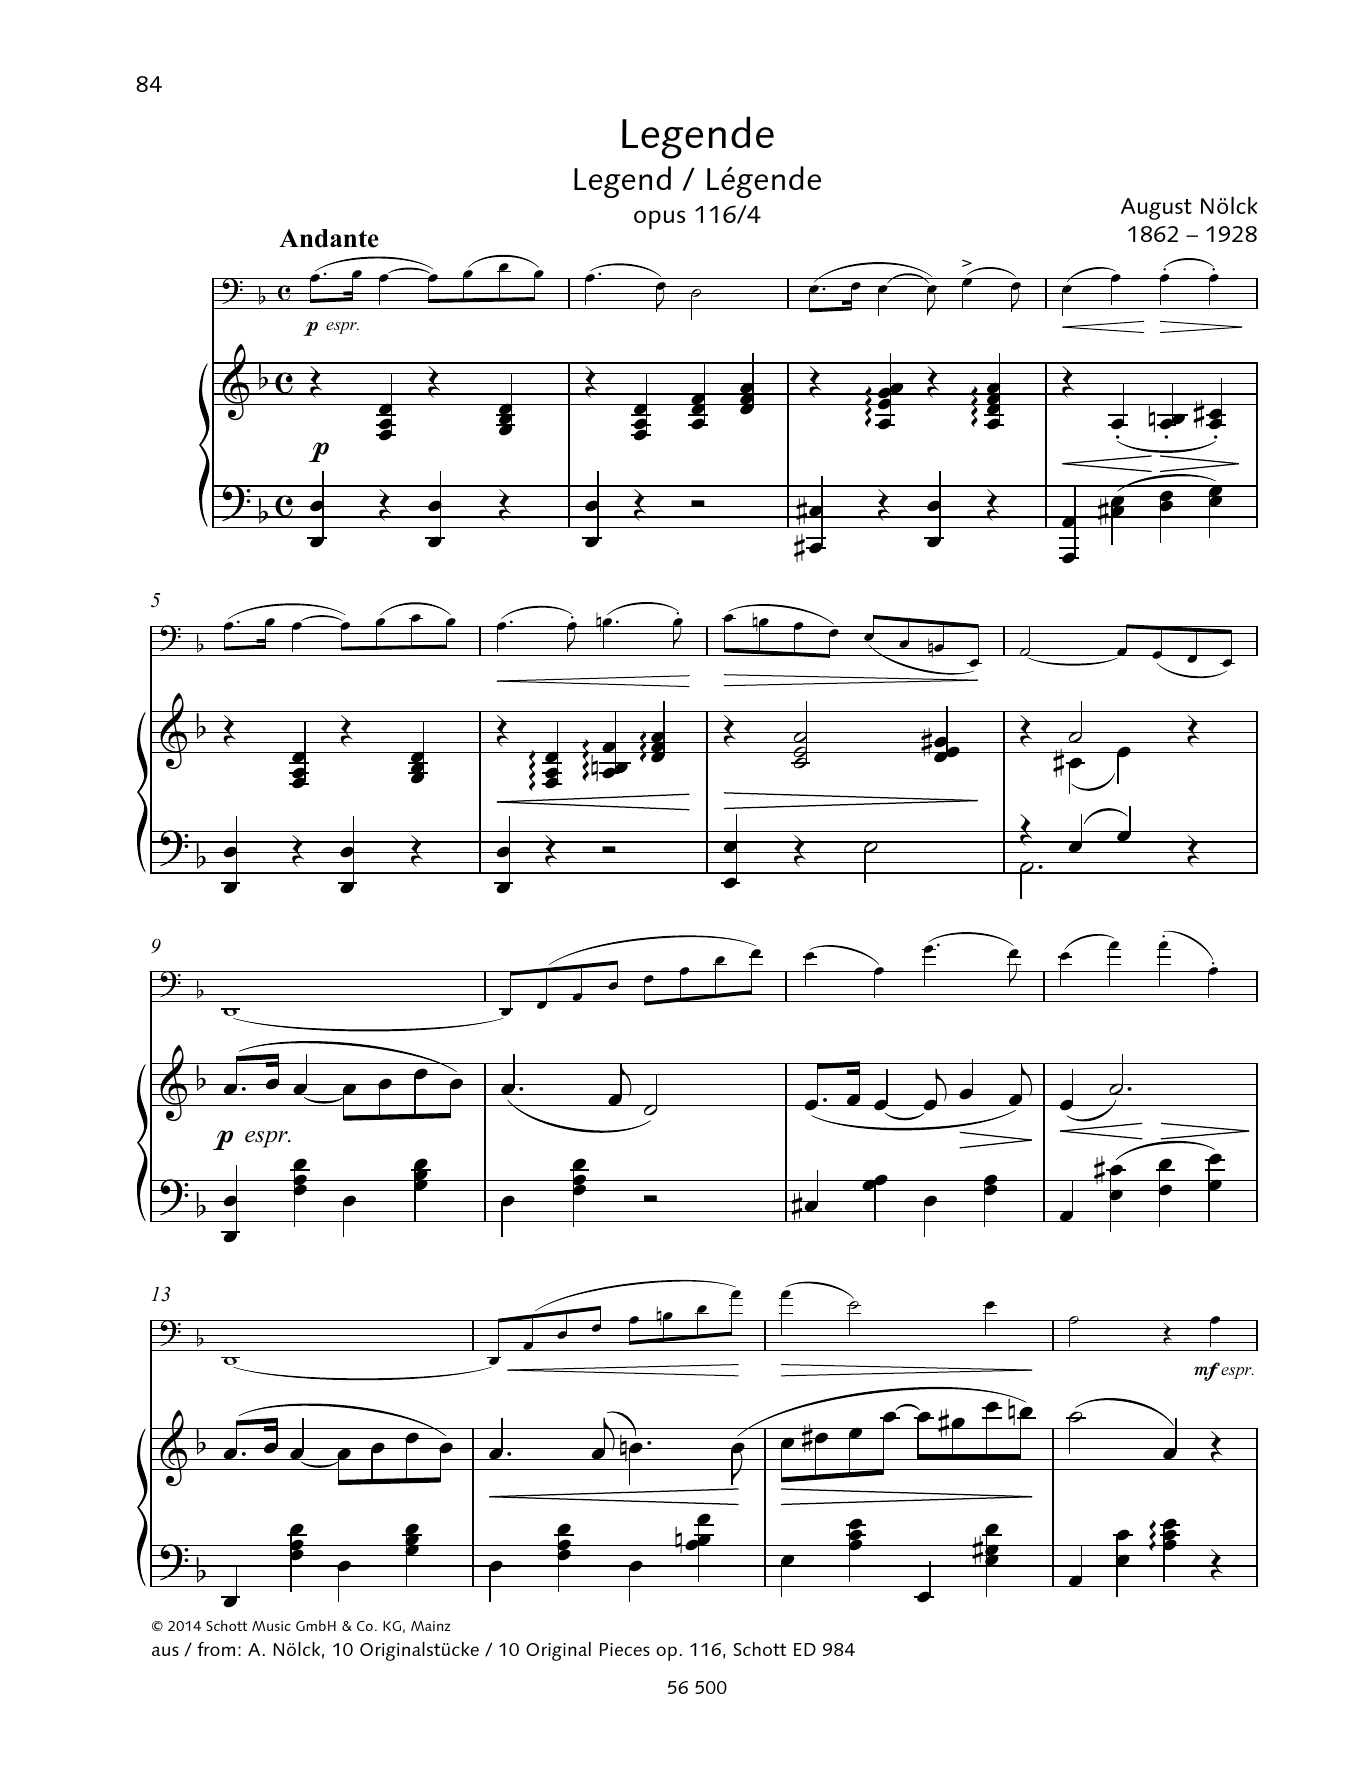 August Nölck Legende Sheet Music Notes & Chords for String Solo - Download or Print PDF